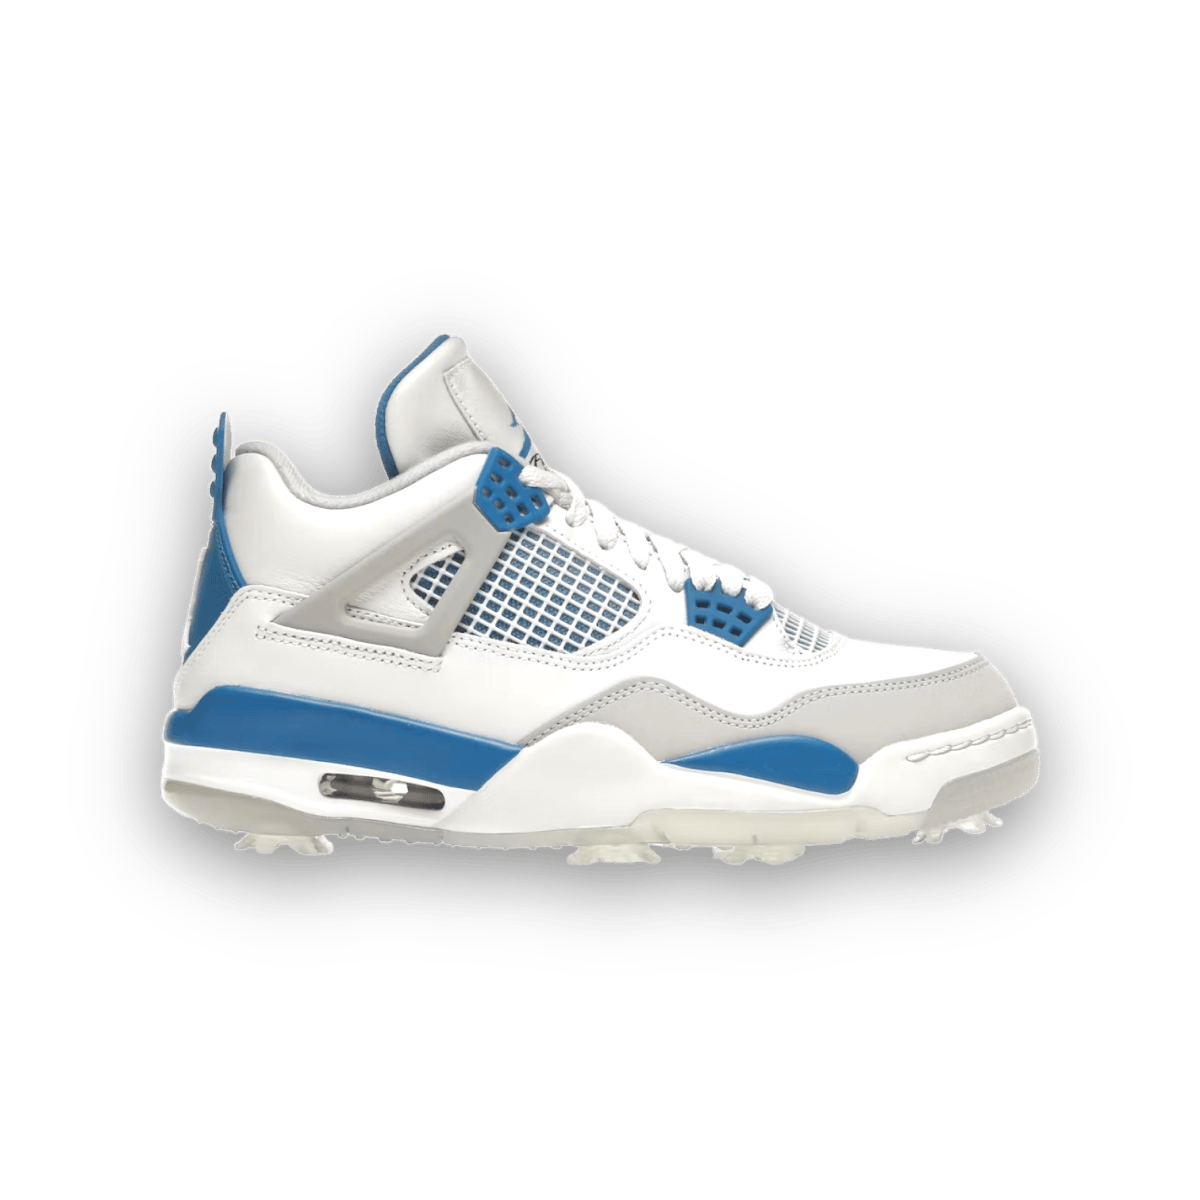 Air Jordan 4 Golf 'Military Blue' - Mid Sneaker - Jordan - Jawns on Fire